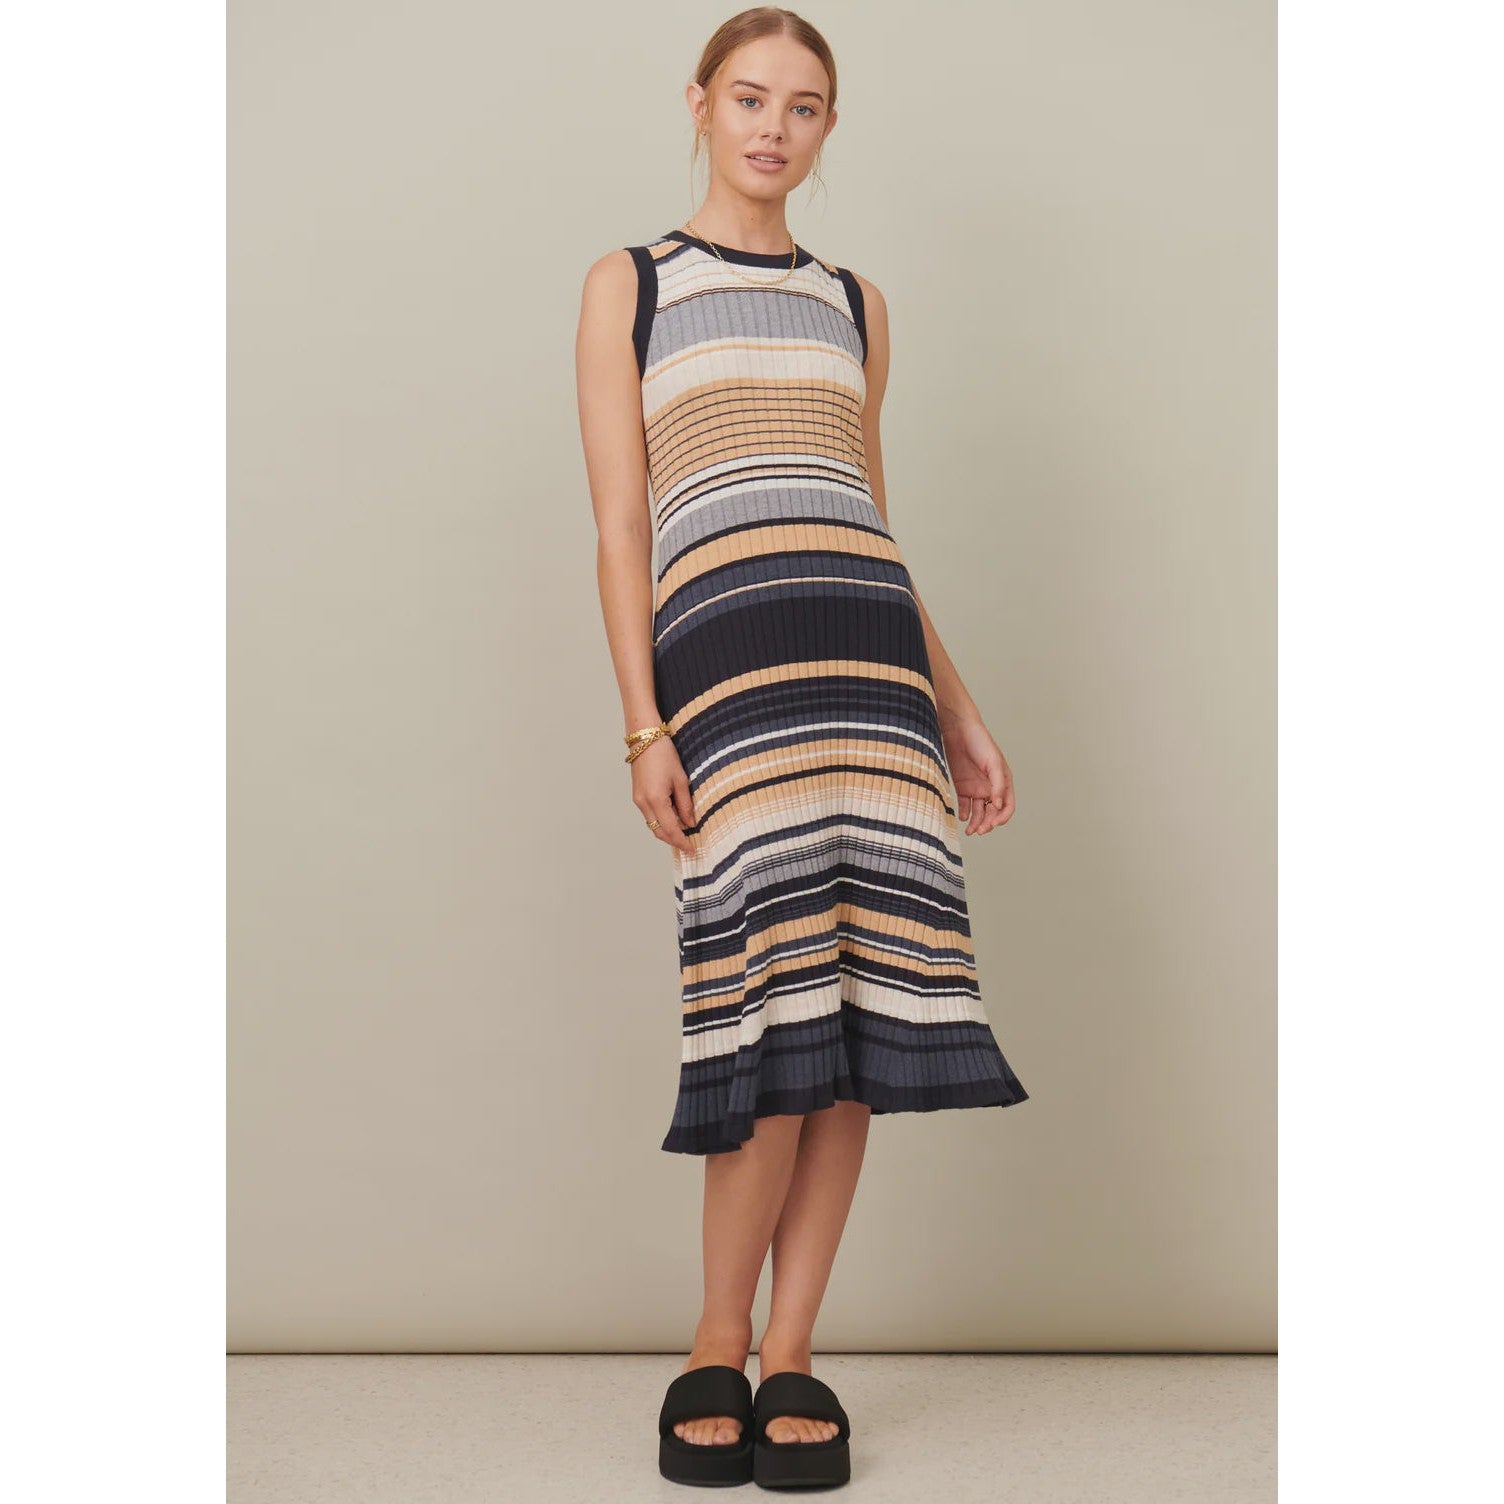 Chloe Knit Dress - Cool Stripe